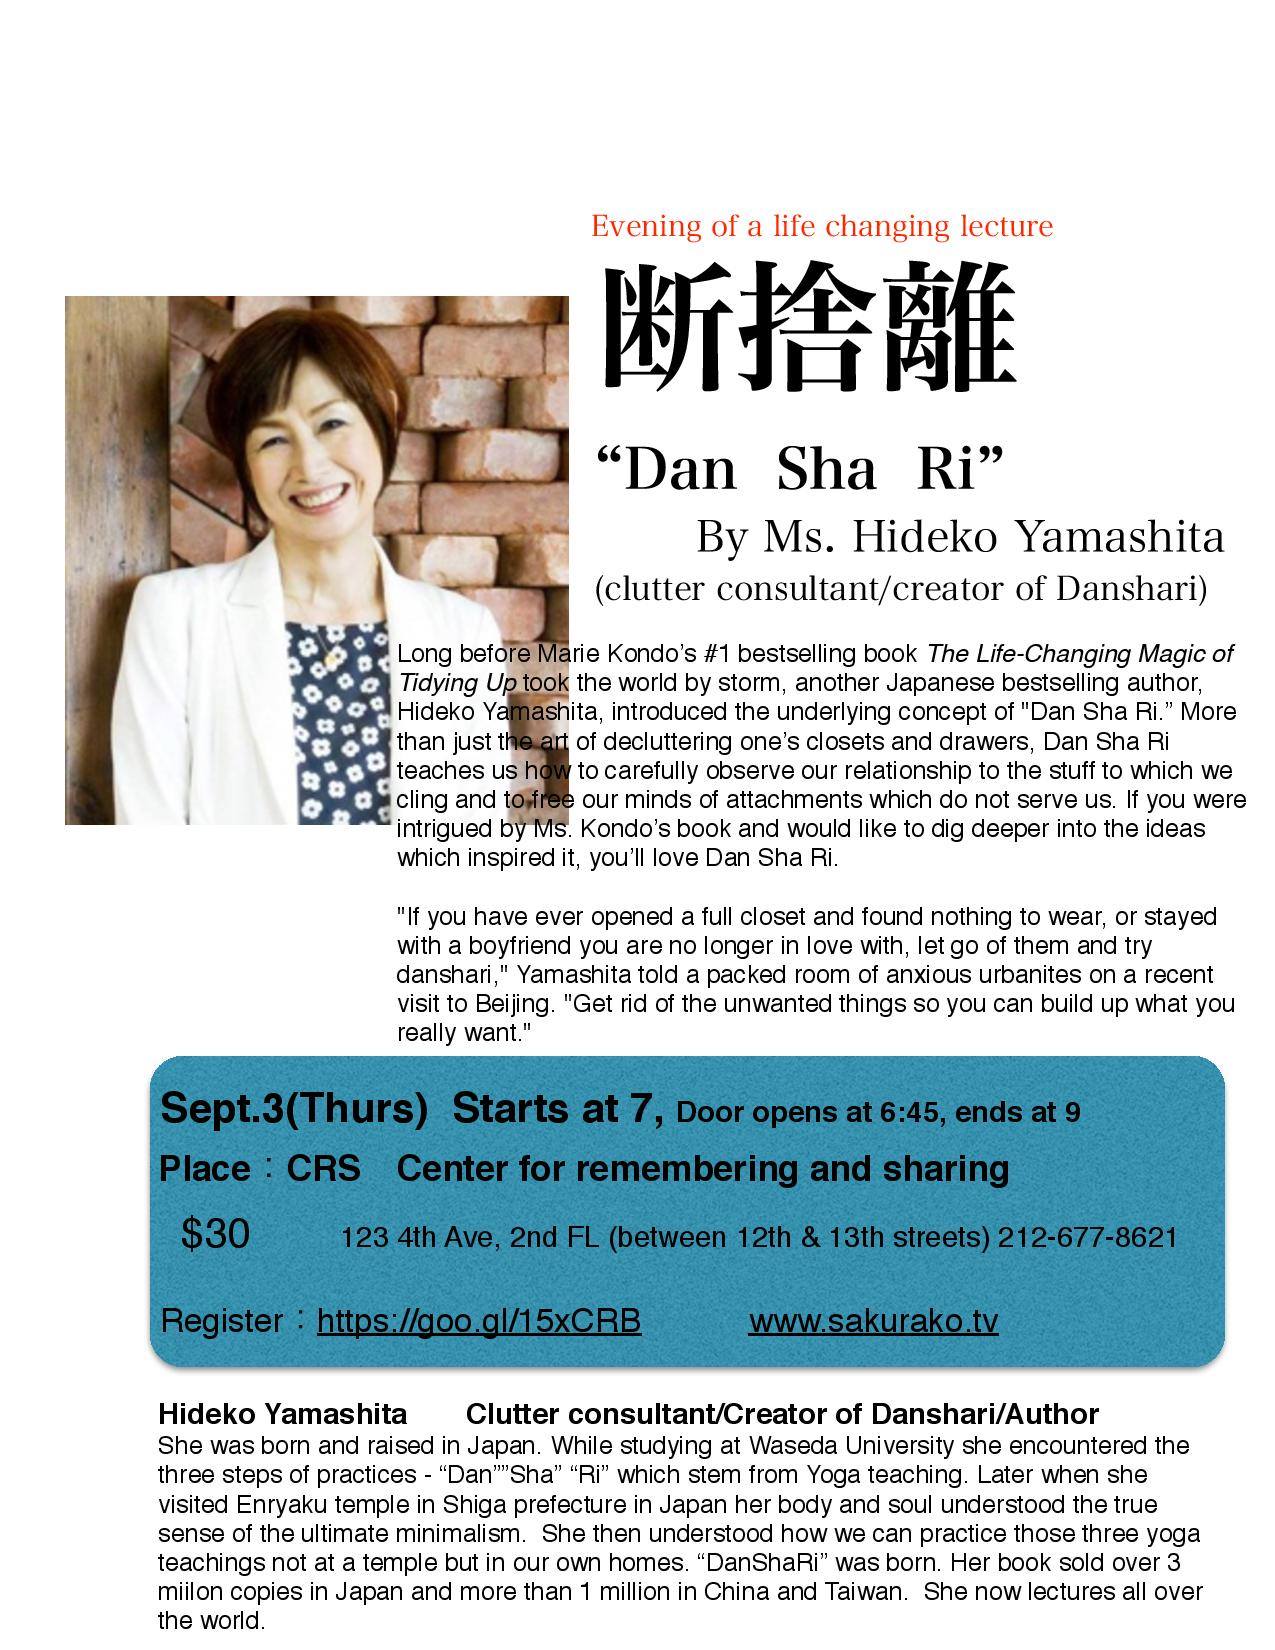 Lecture by Hideko Yamashita at CRS 9/3/15